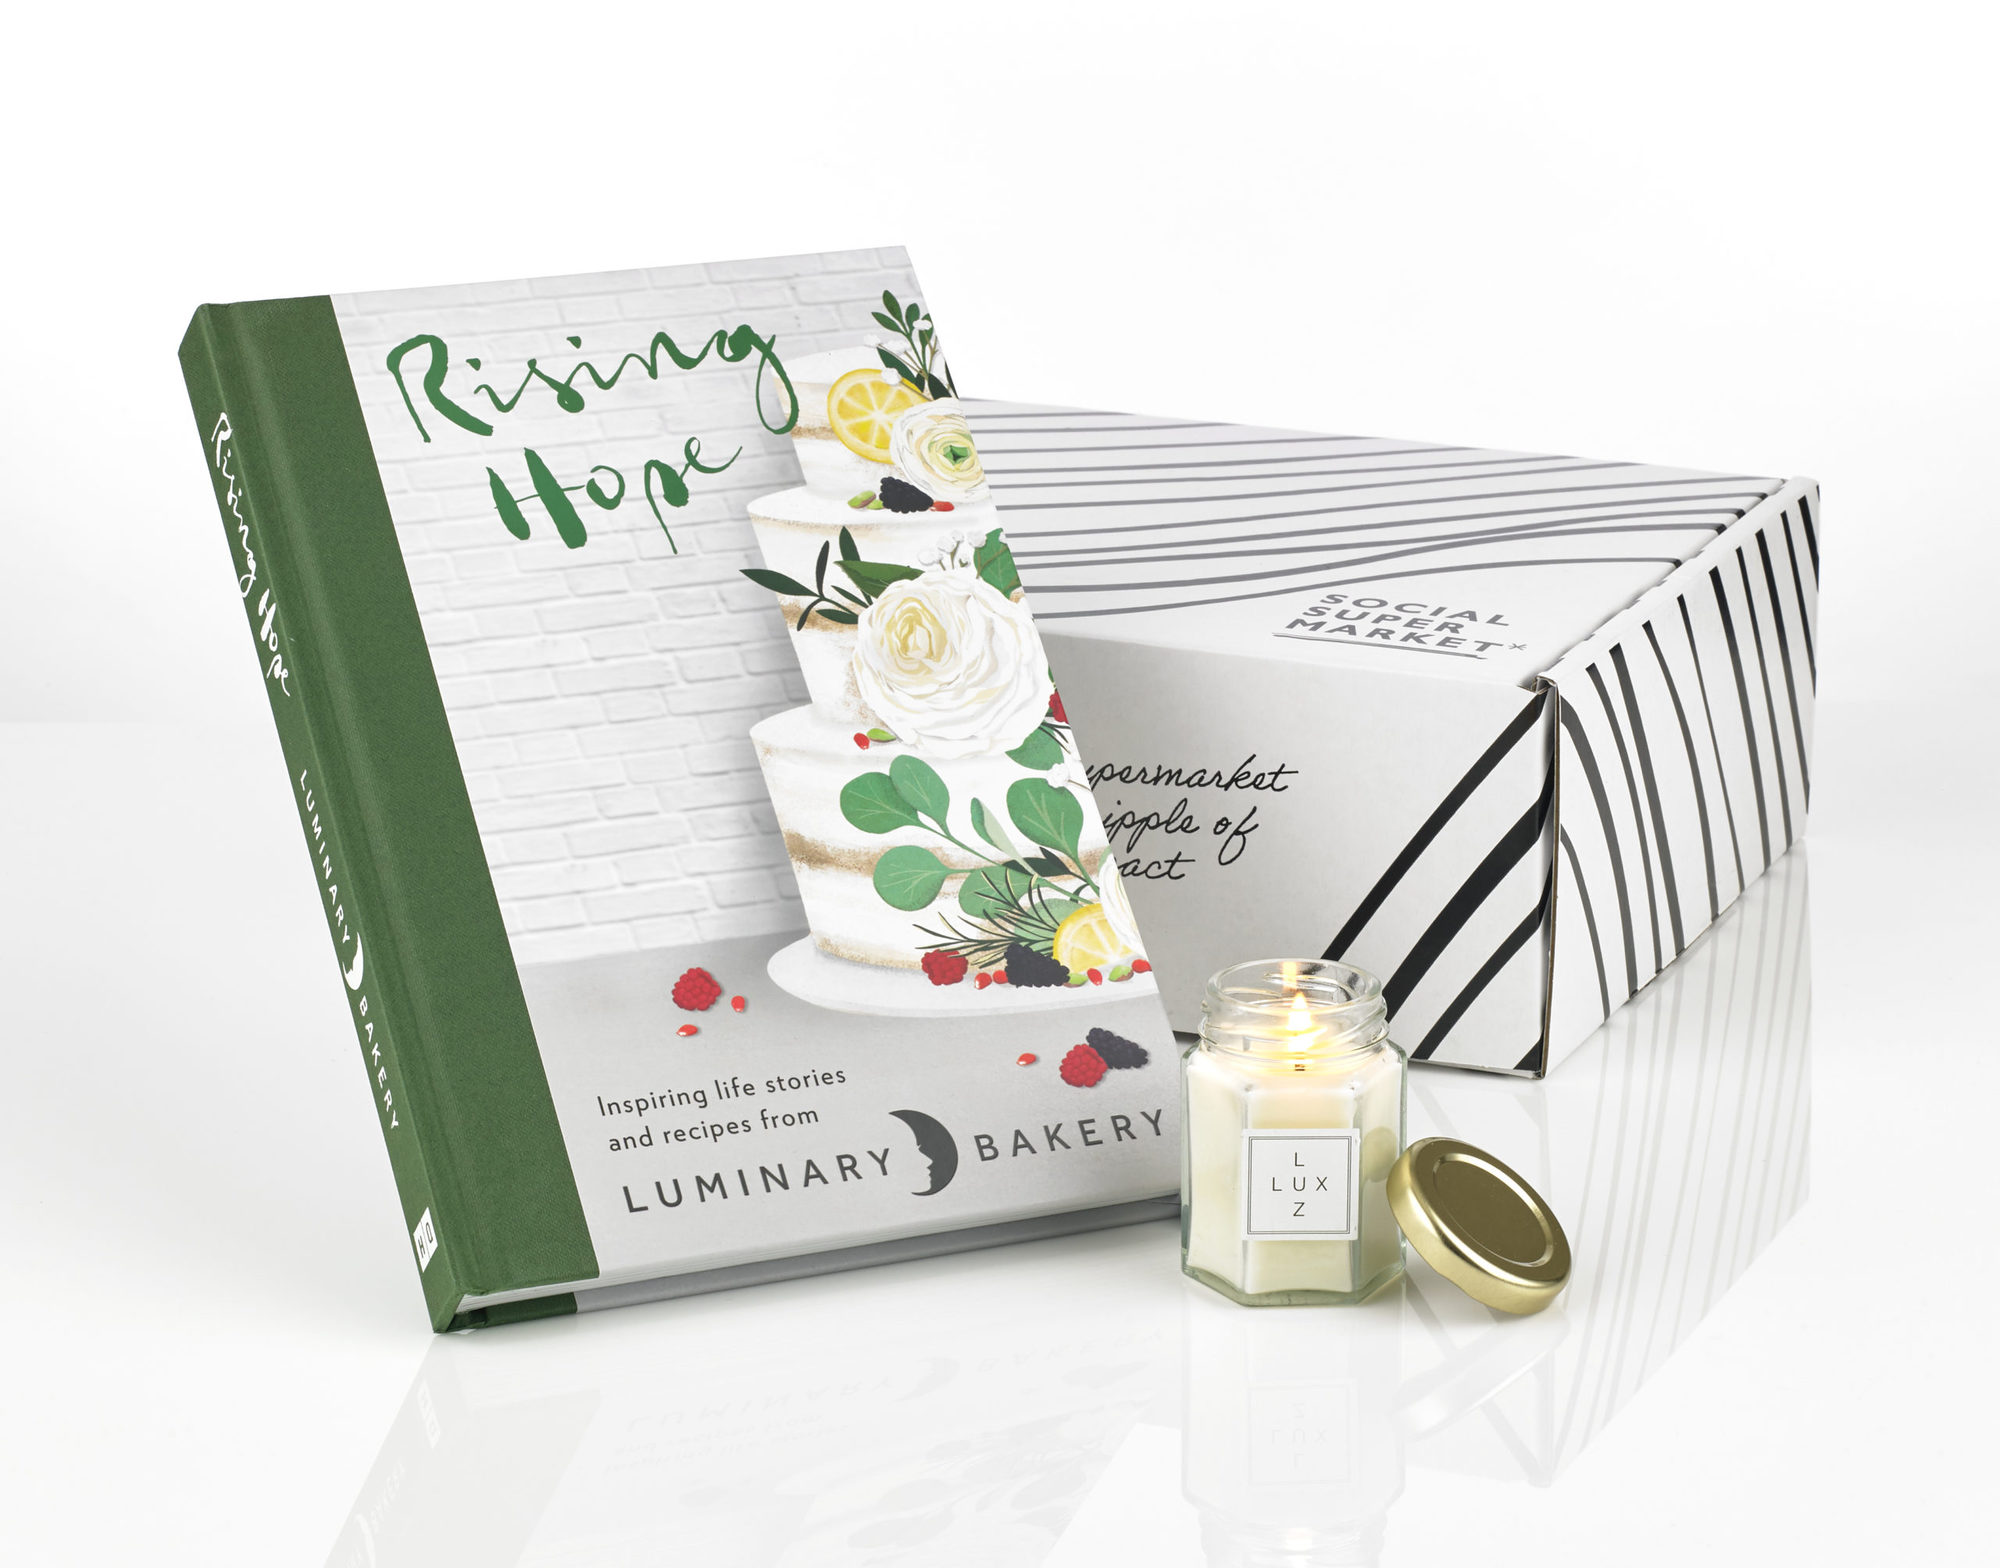 Social Enterprise Cookbook & Small Candle Gift Box